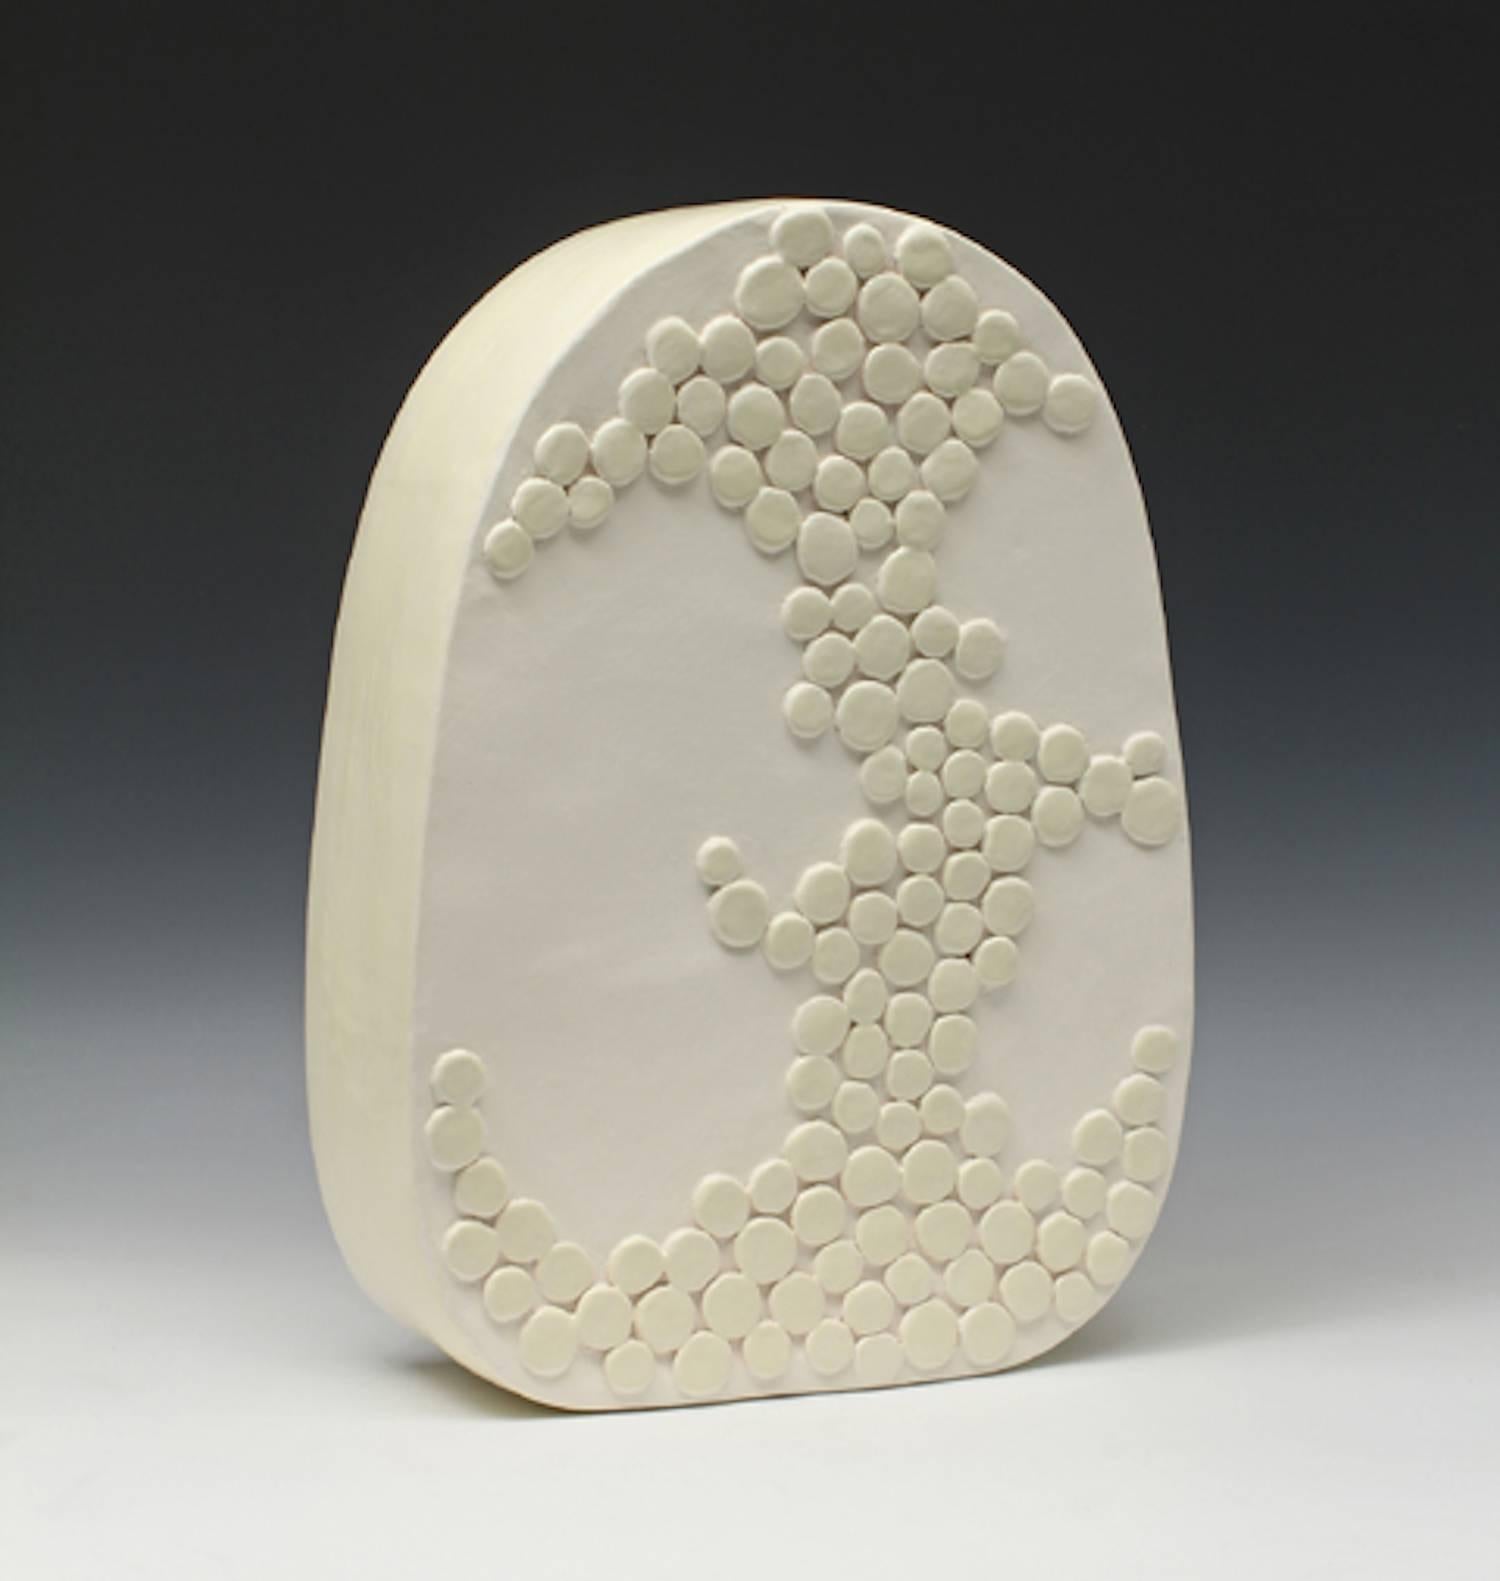 Jane B. Grimm Abstract Sculpture - Egg V